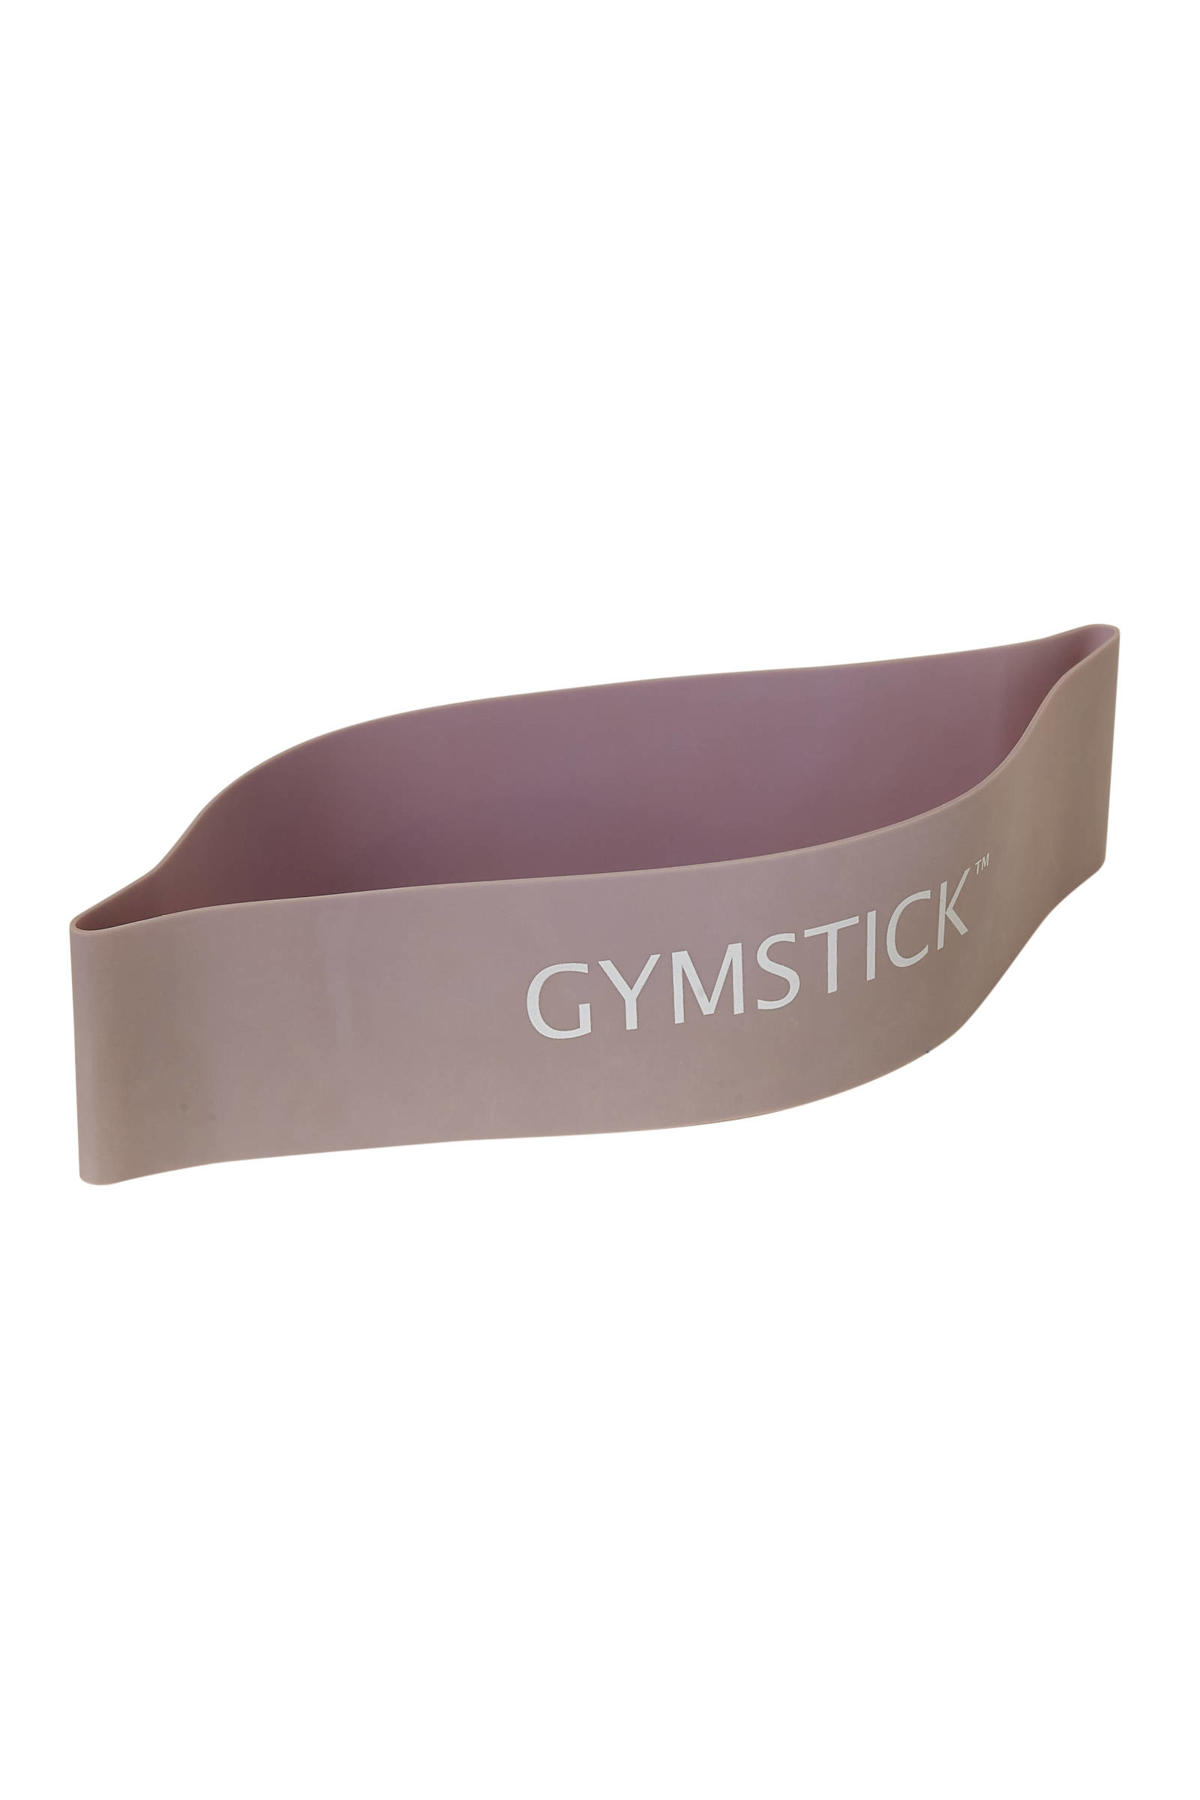 Langwerpig Uitdaging limoen Gymstick mini weerstandsband strong | wehkamp